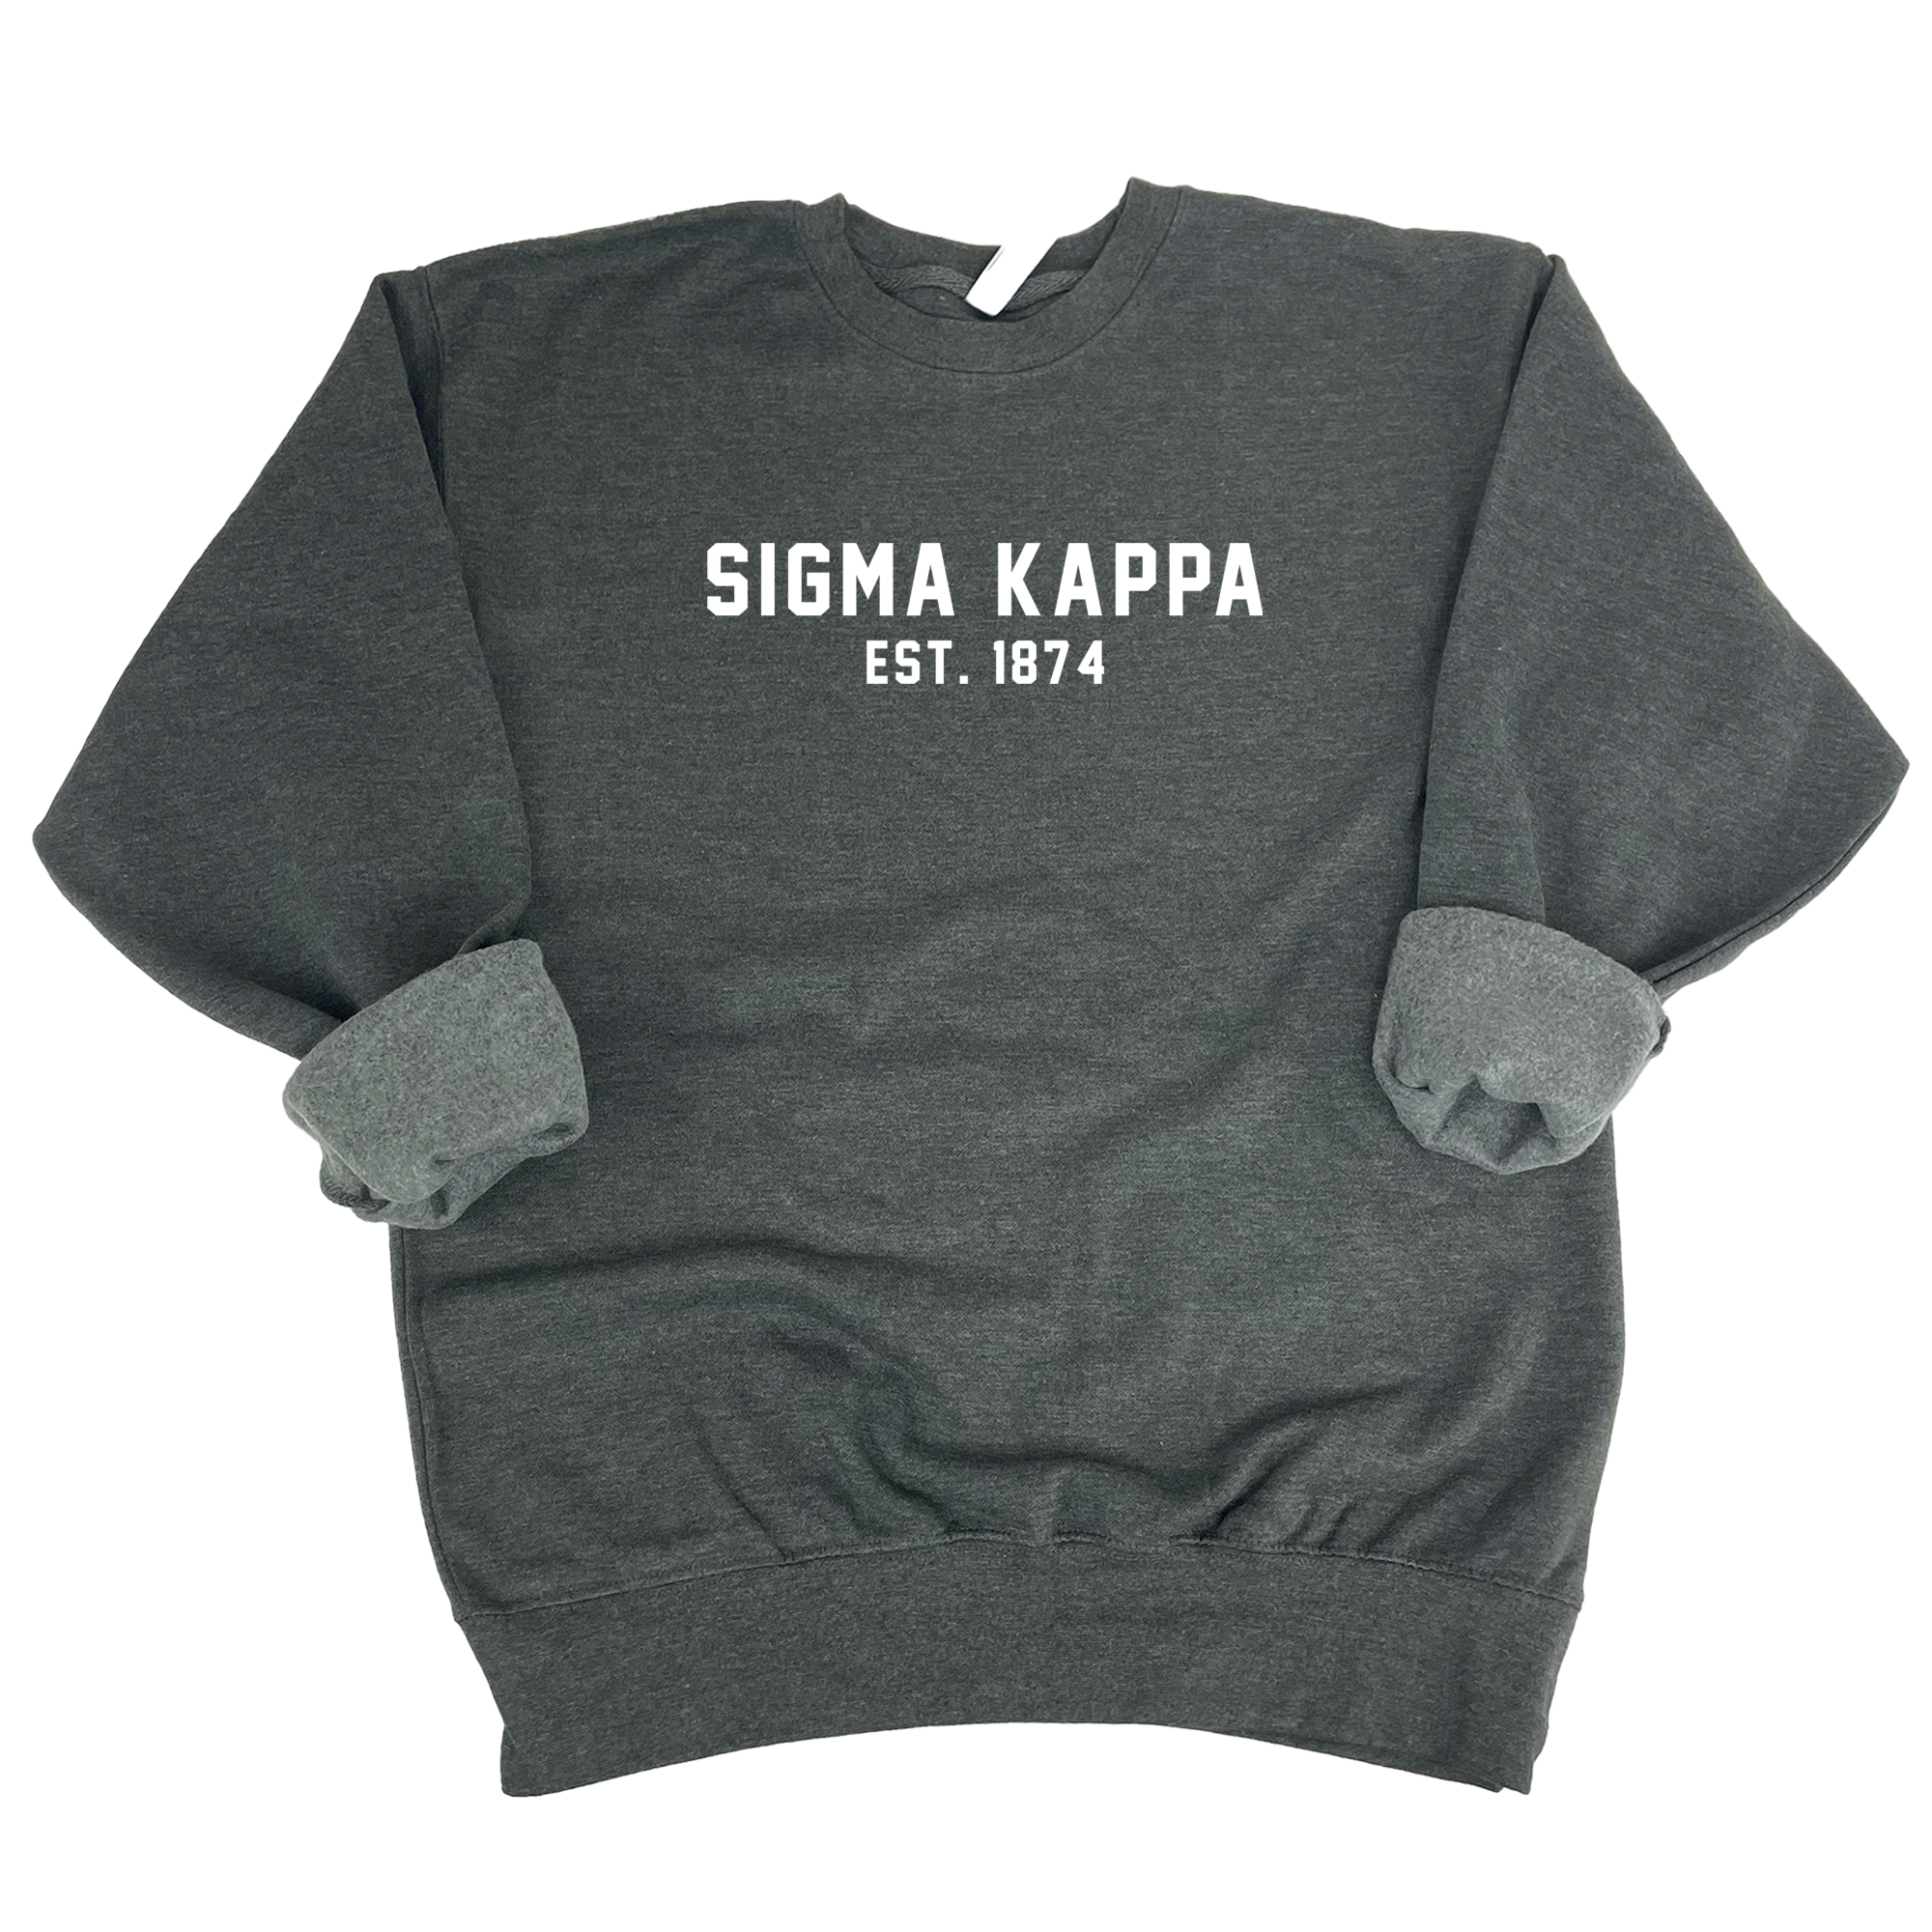 Sigma Kappa Est. 1874 Sweatshirt – Go Greek Chic